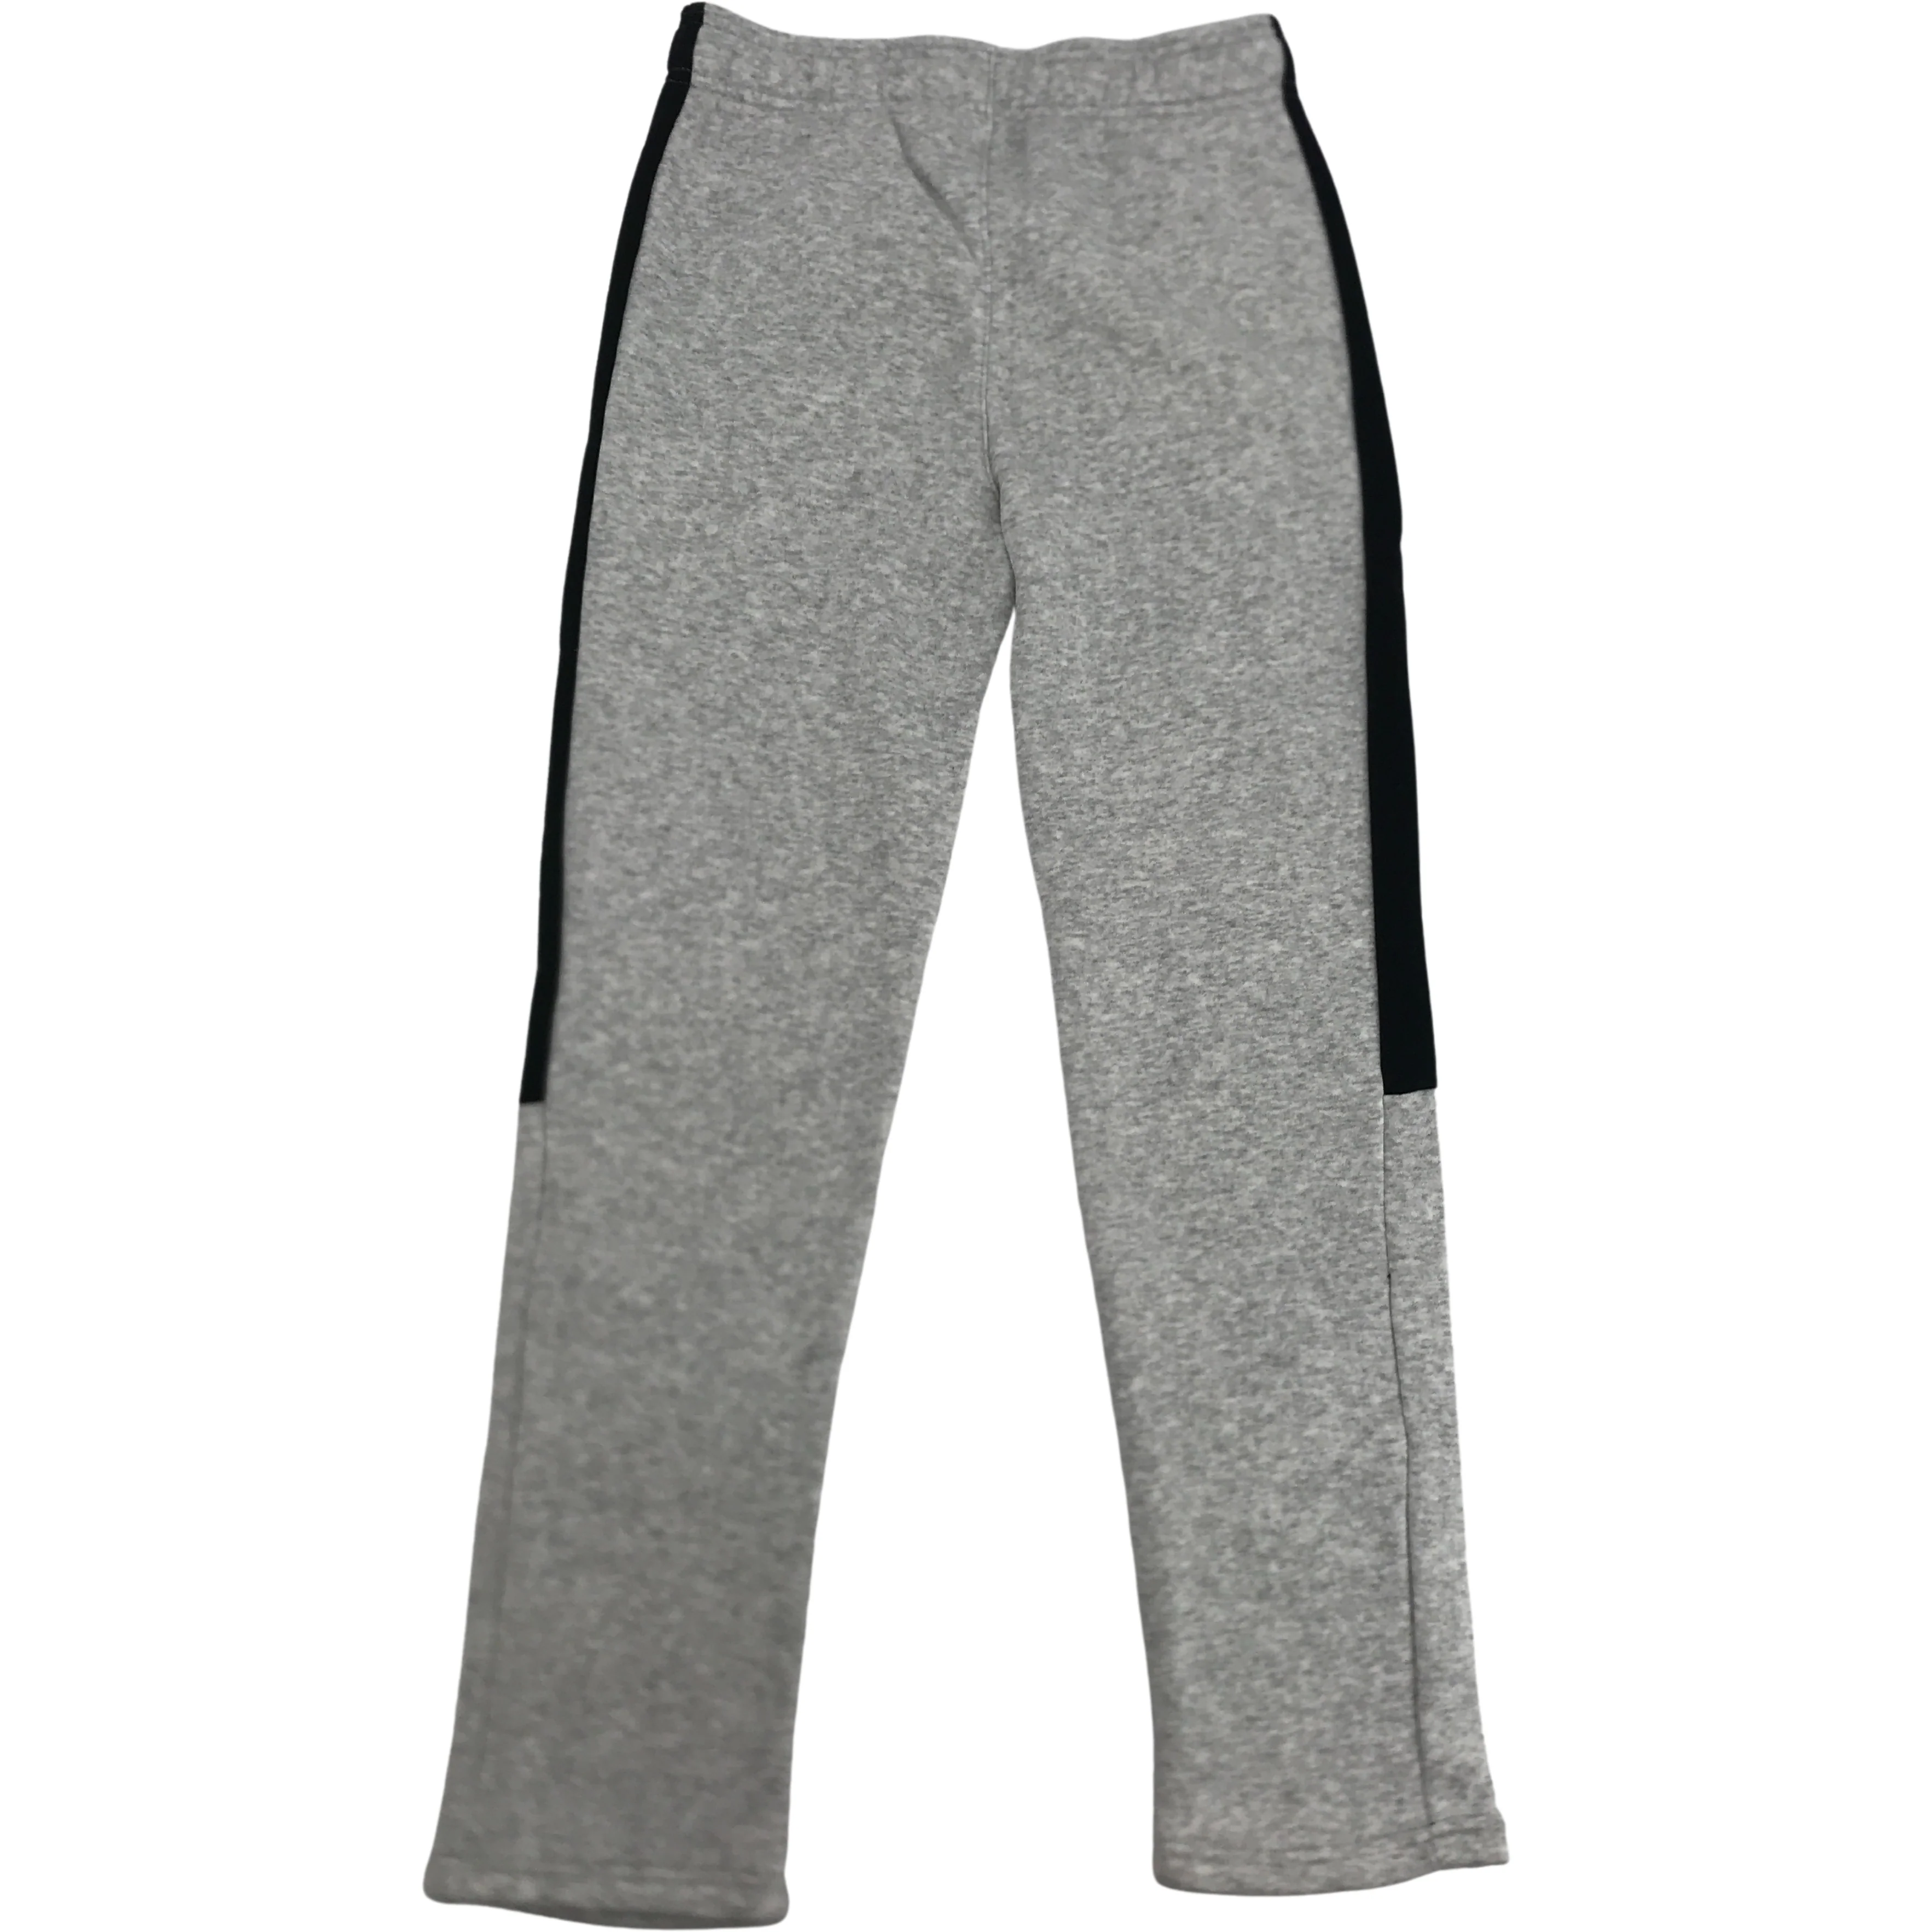 Puma Children's Sweatpants: Kid's Joggers / Grey / Size XLarge (14/16)